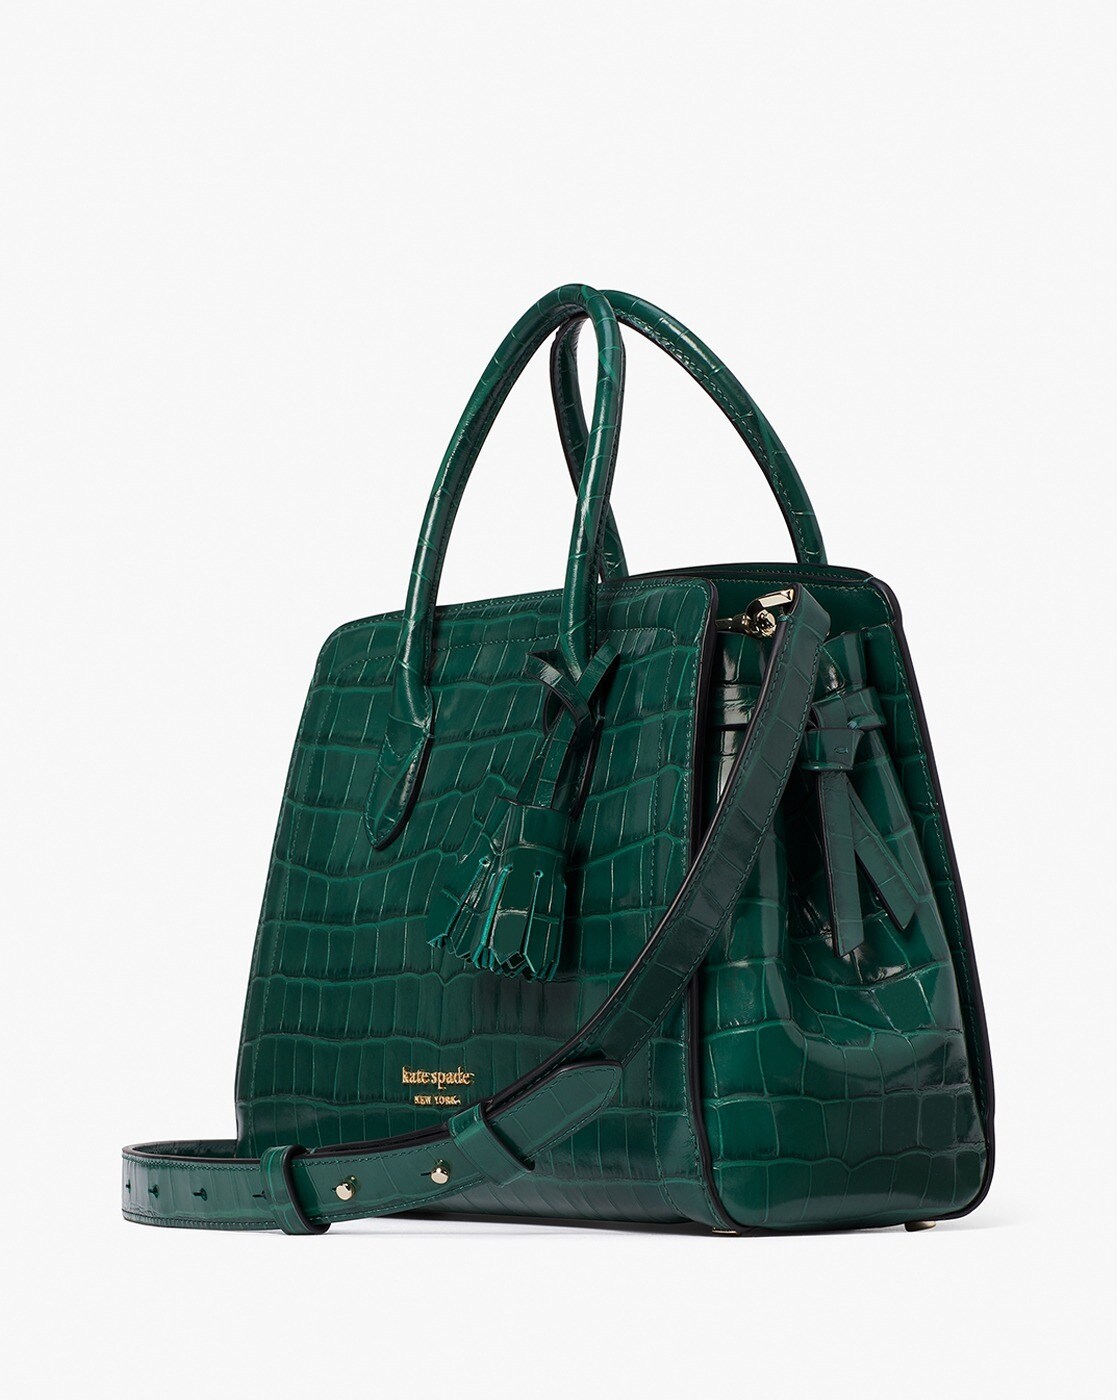 New* Strathberry East West Mini green croc-embossed handbag, orig. $645 |  eBay